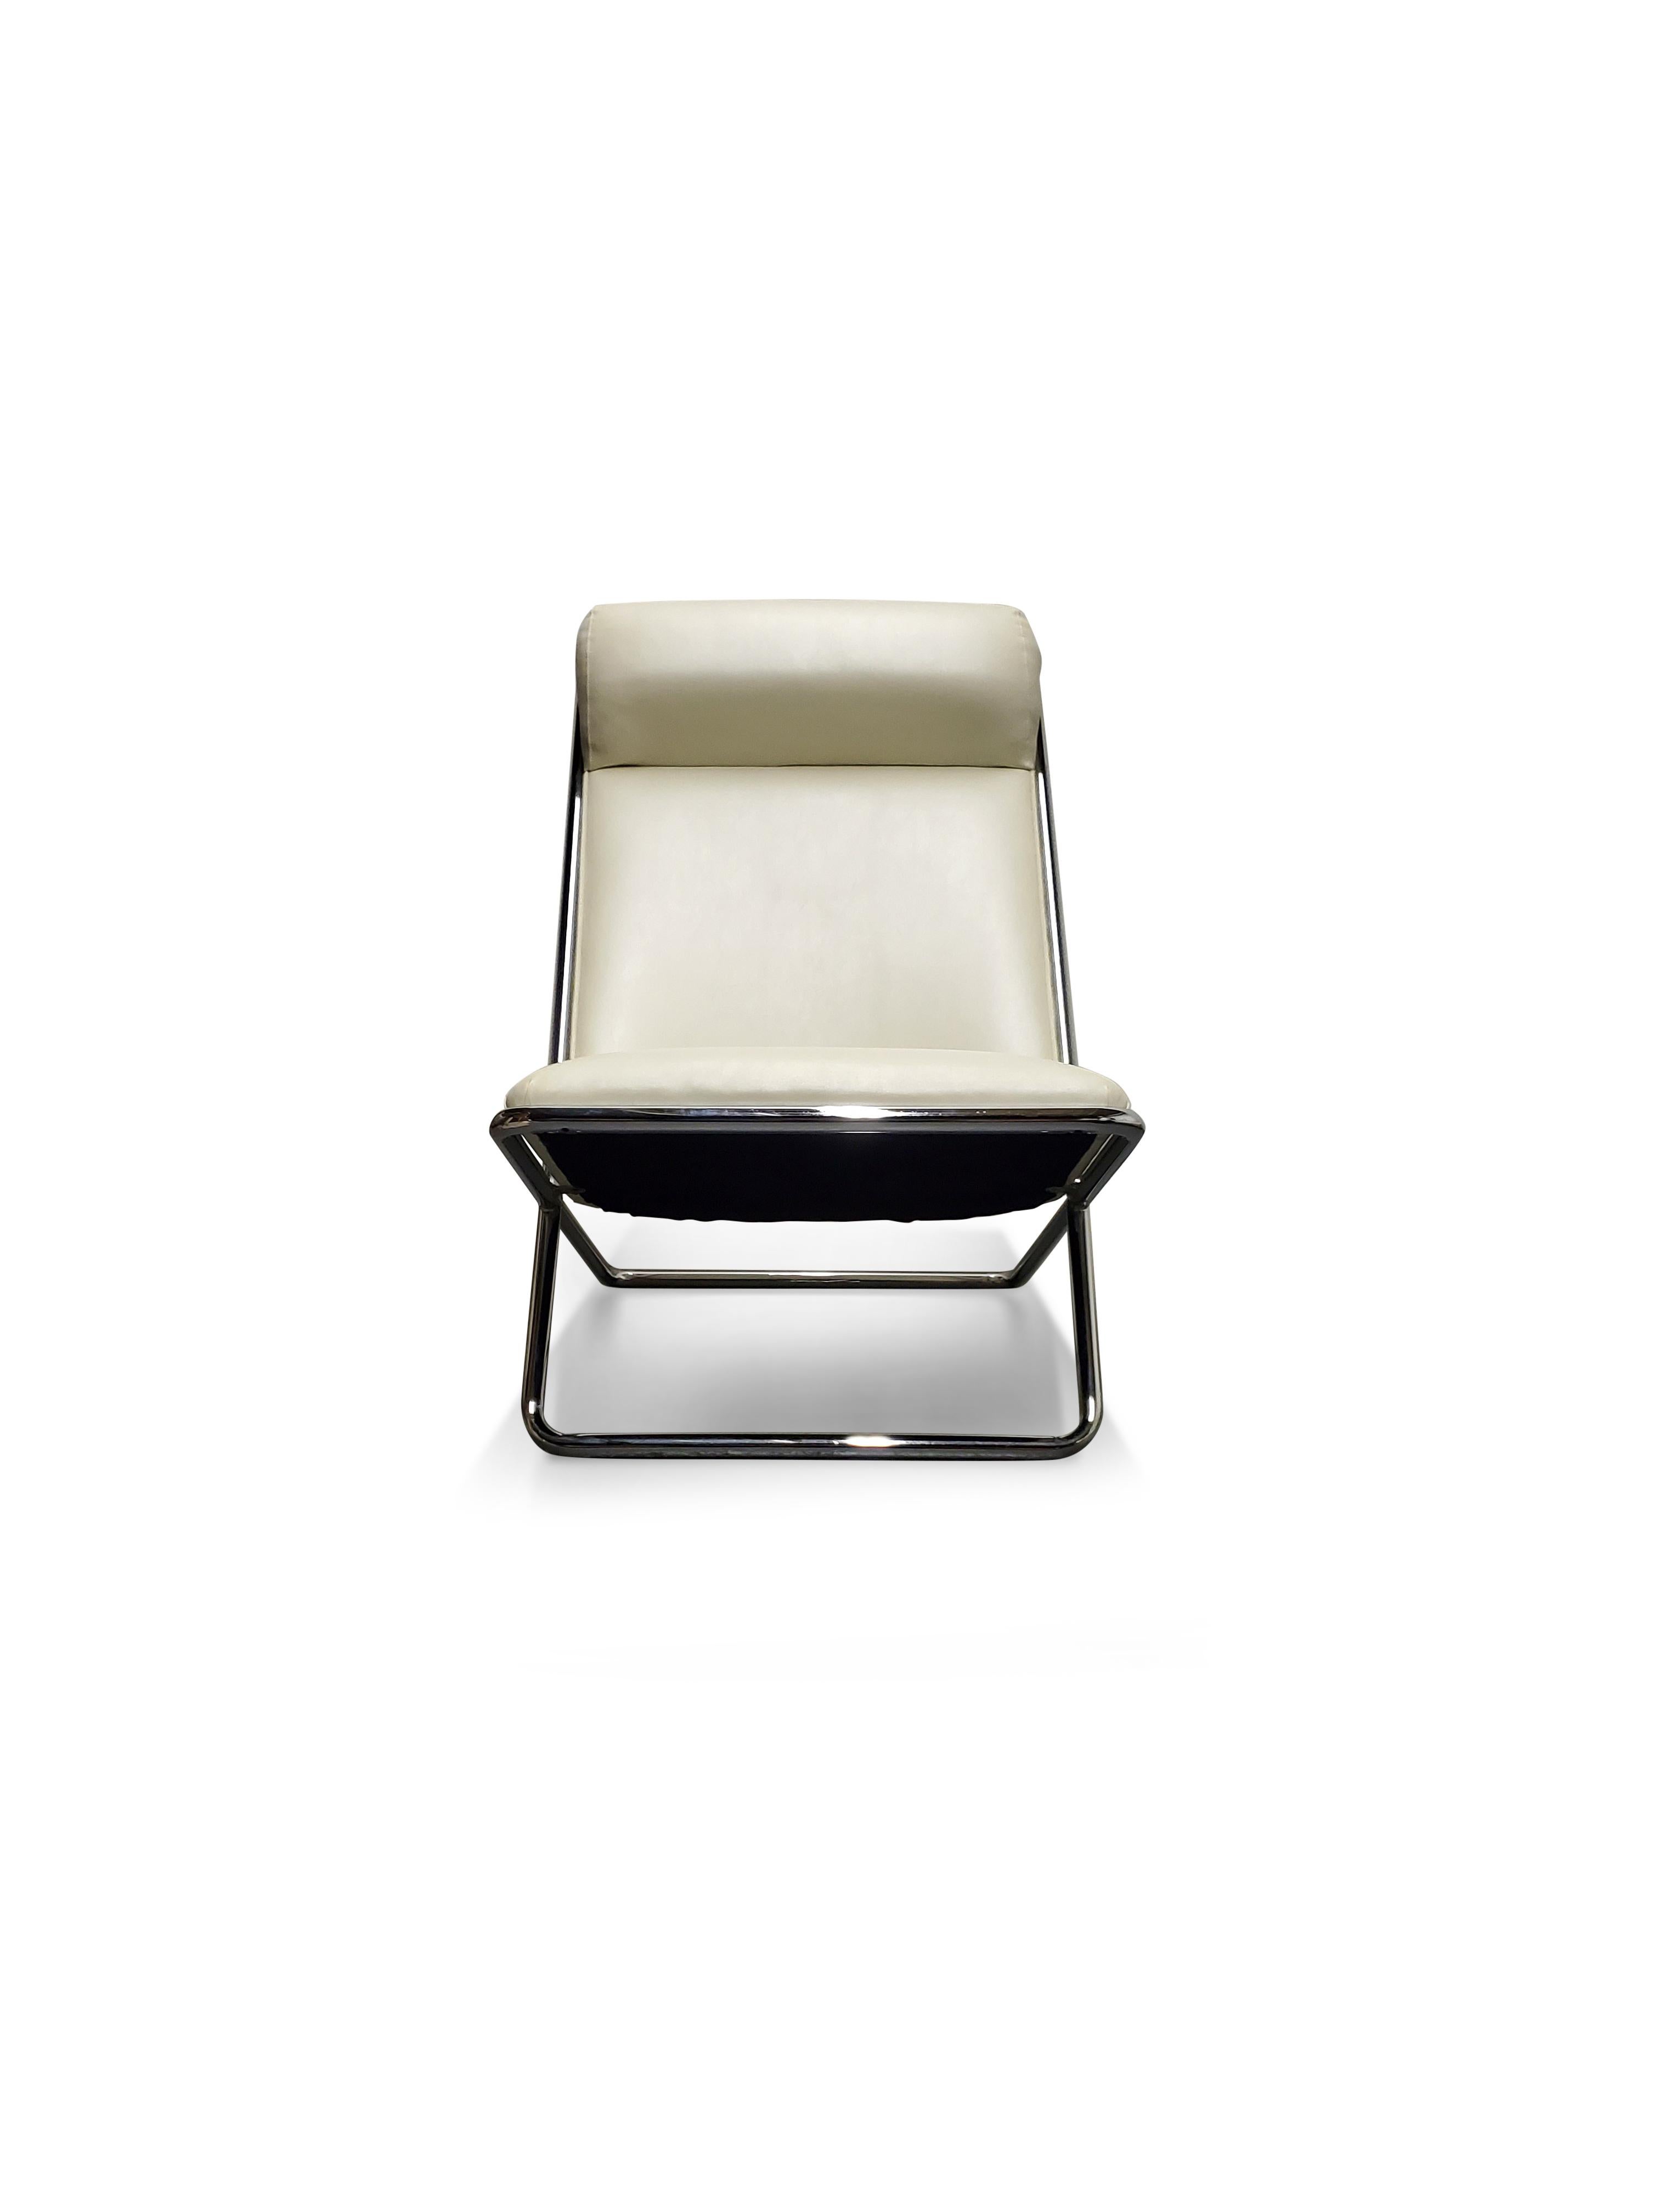 Ward Bennett Scissor Lounge Chair  For Sale 4